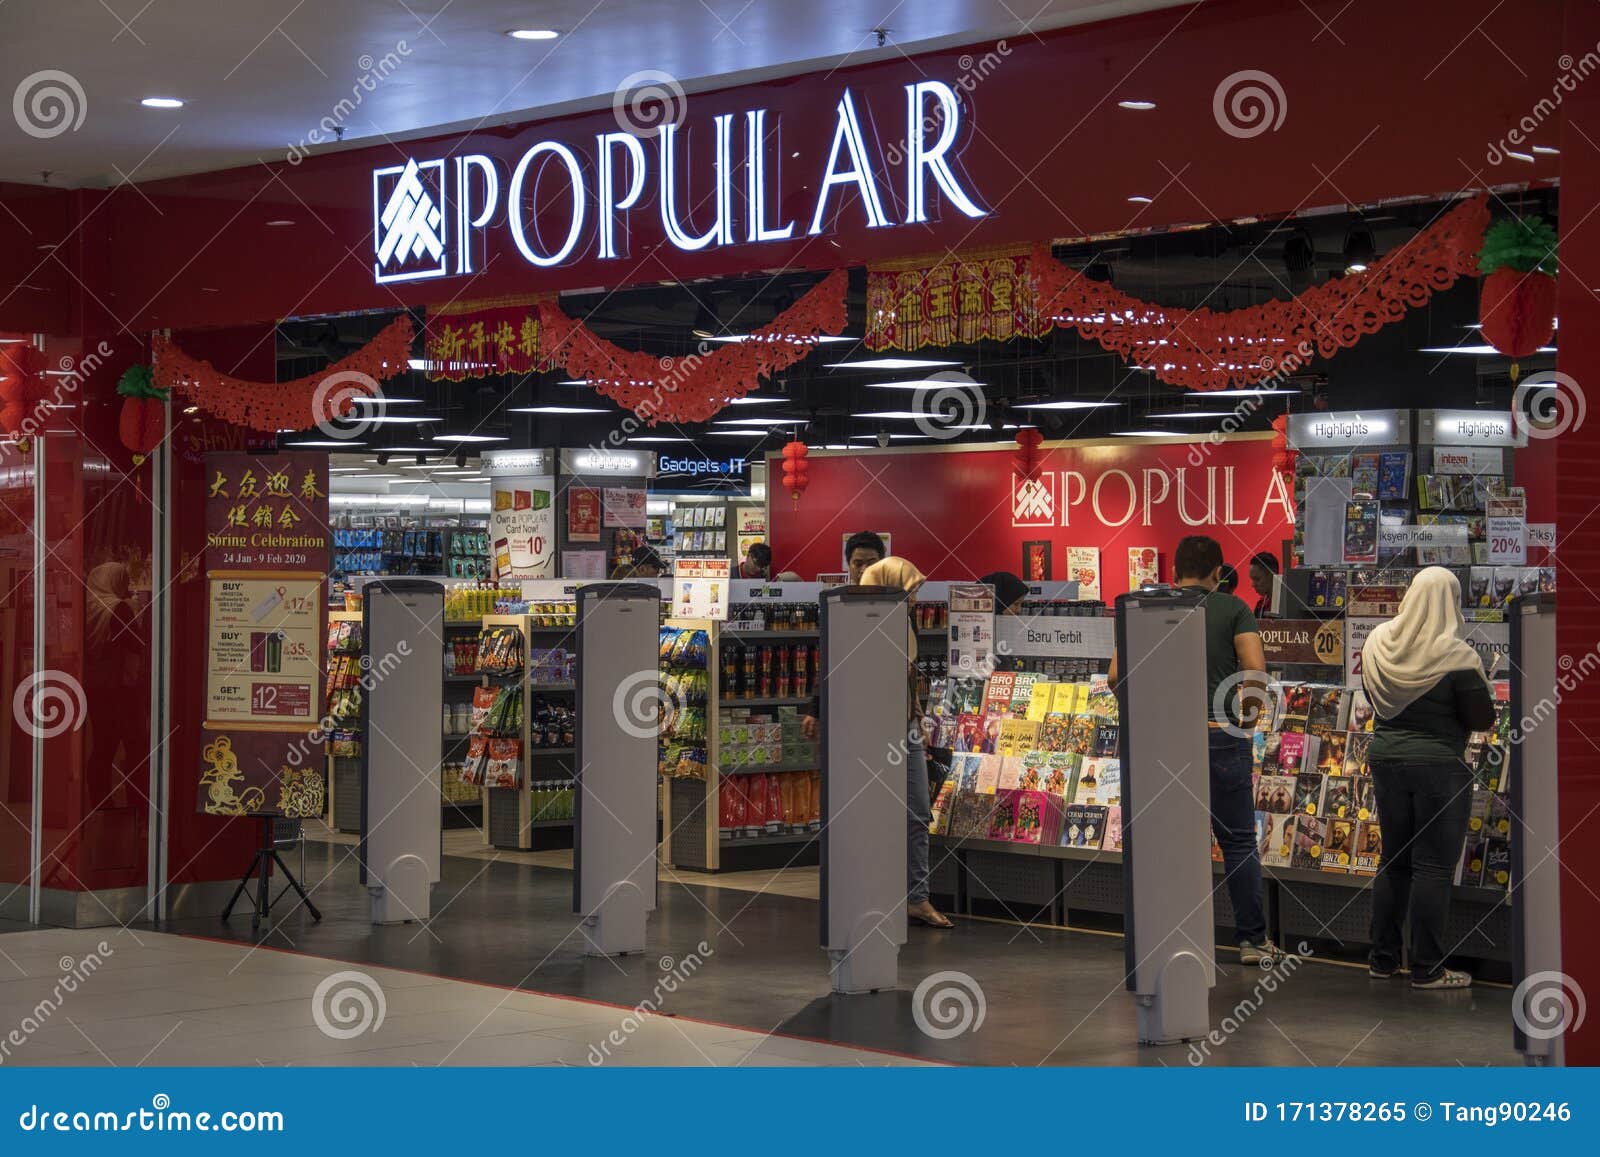 Popular Bookstore Located in Johor Bahru, Malaysia Editorial Image